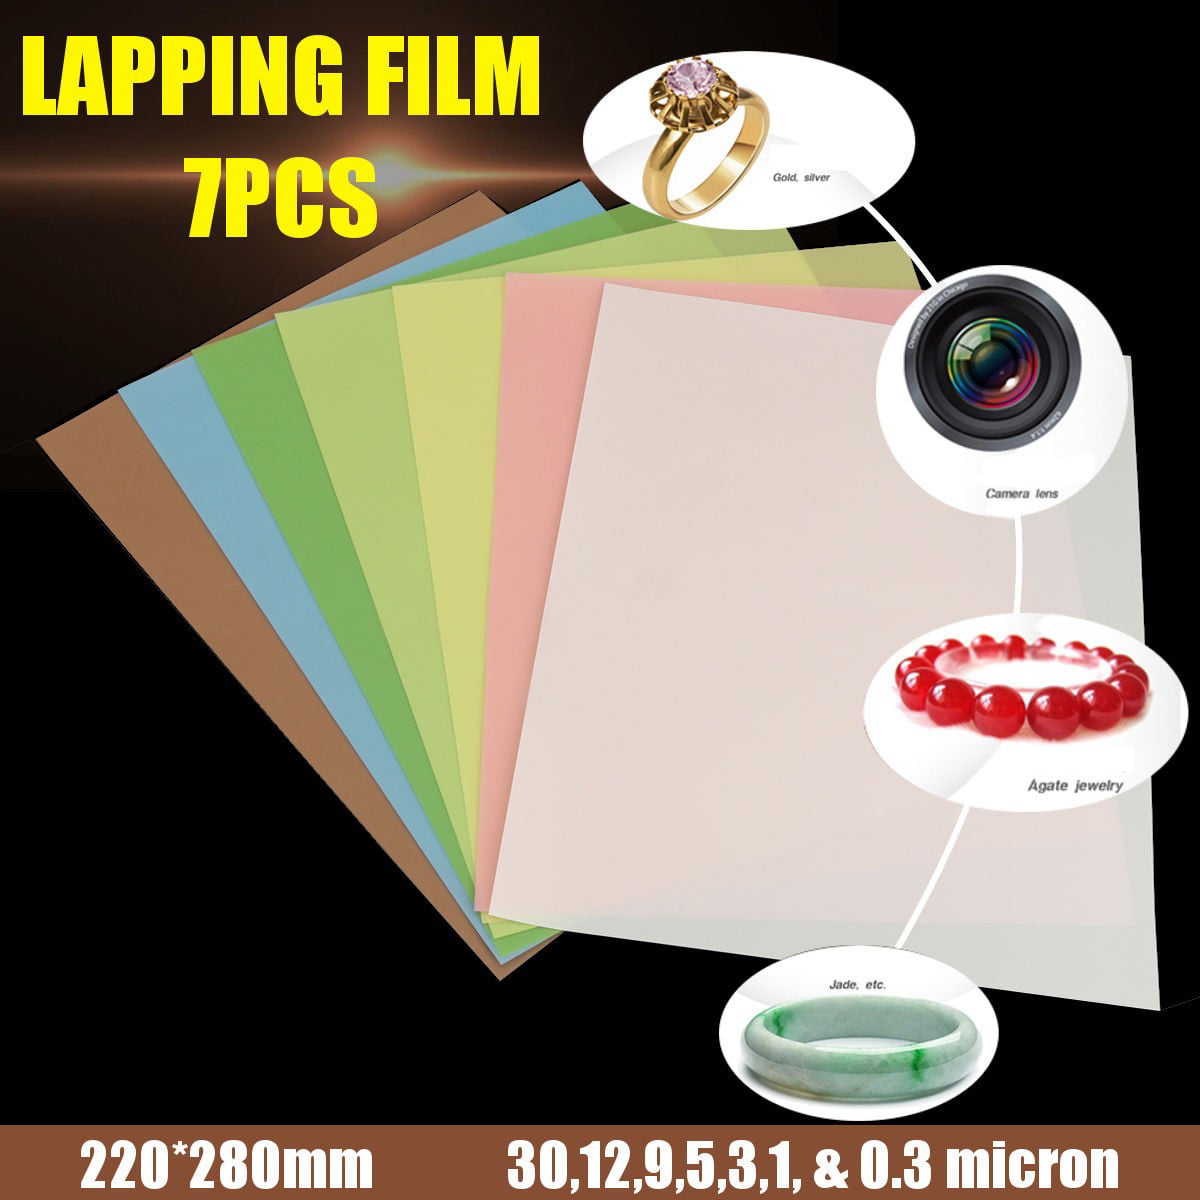 7Pcs 8.7x11'' Lapping Film Sheets Assortment 30,12,9,5,3,1,0.3 7 Colors 